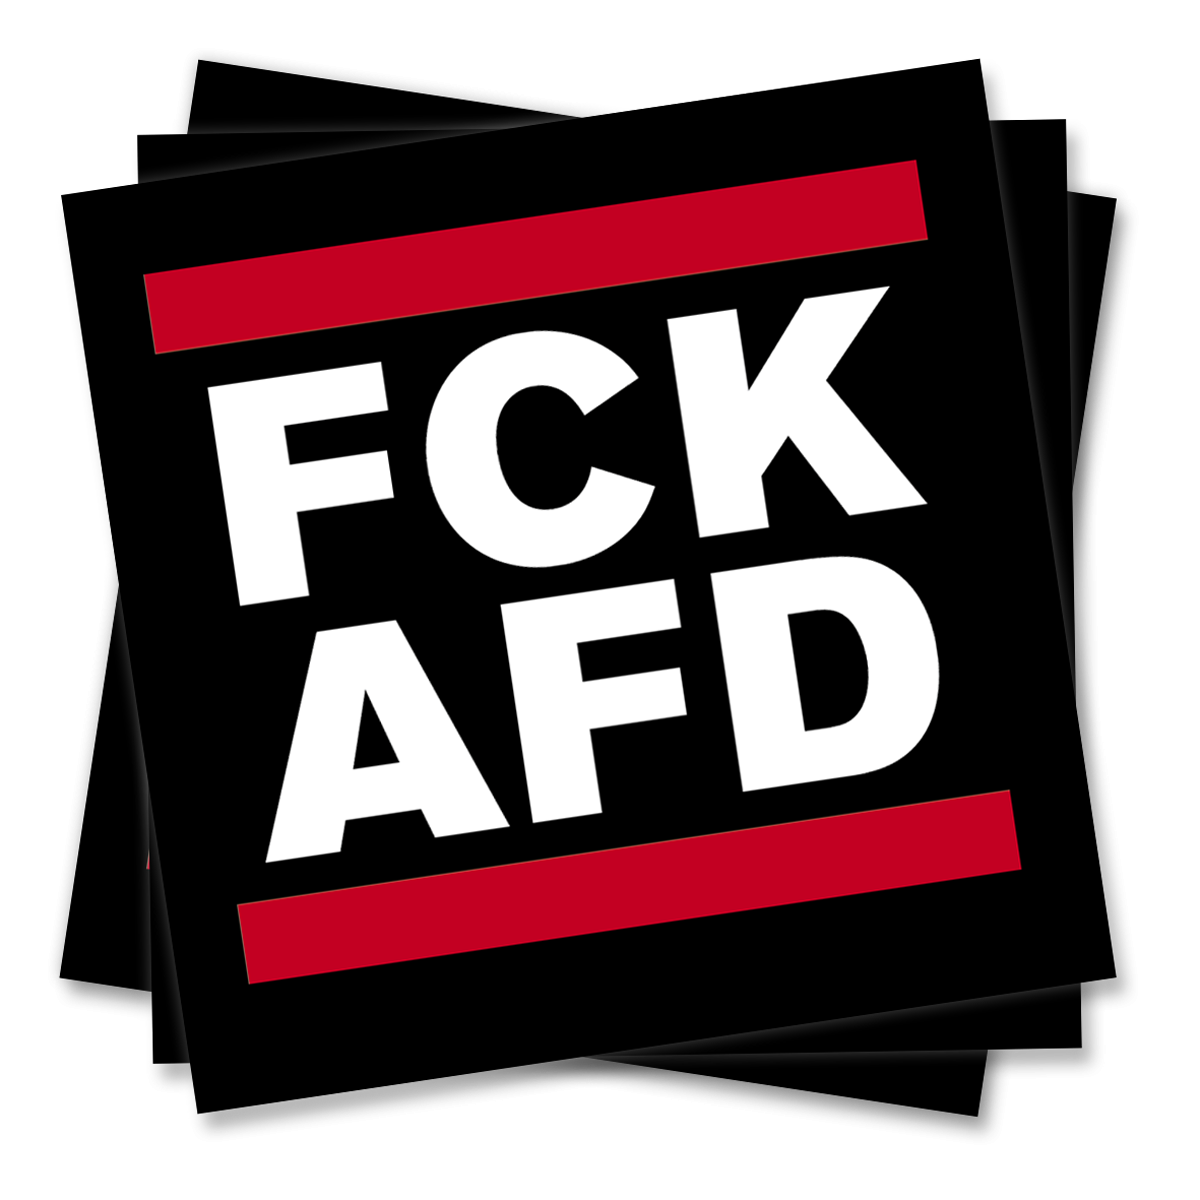 FCK AFD